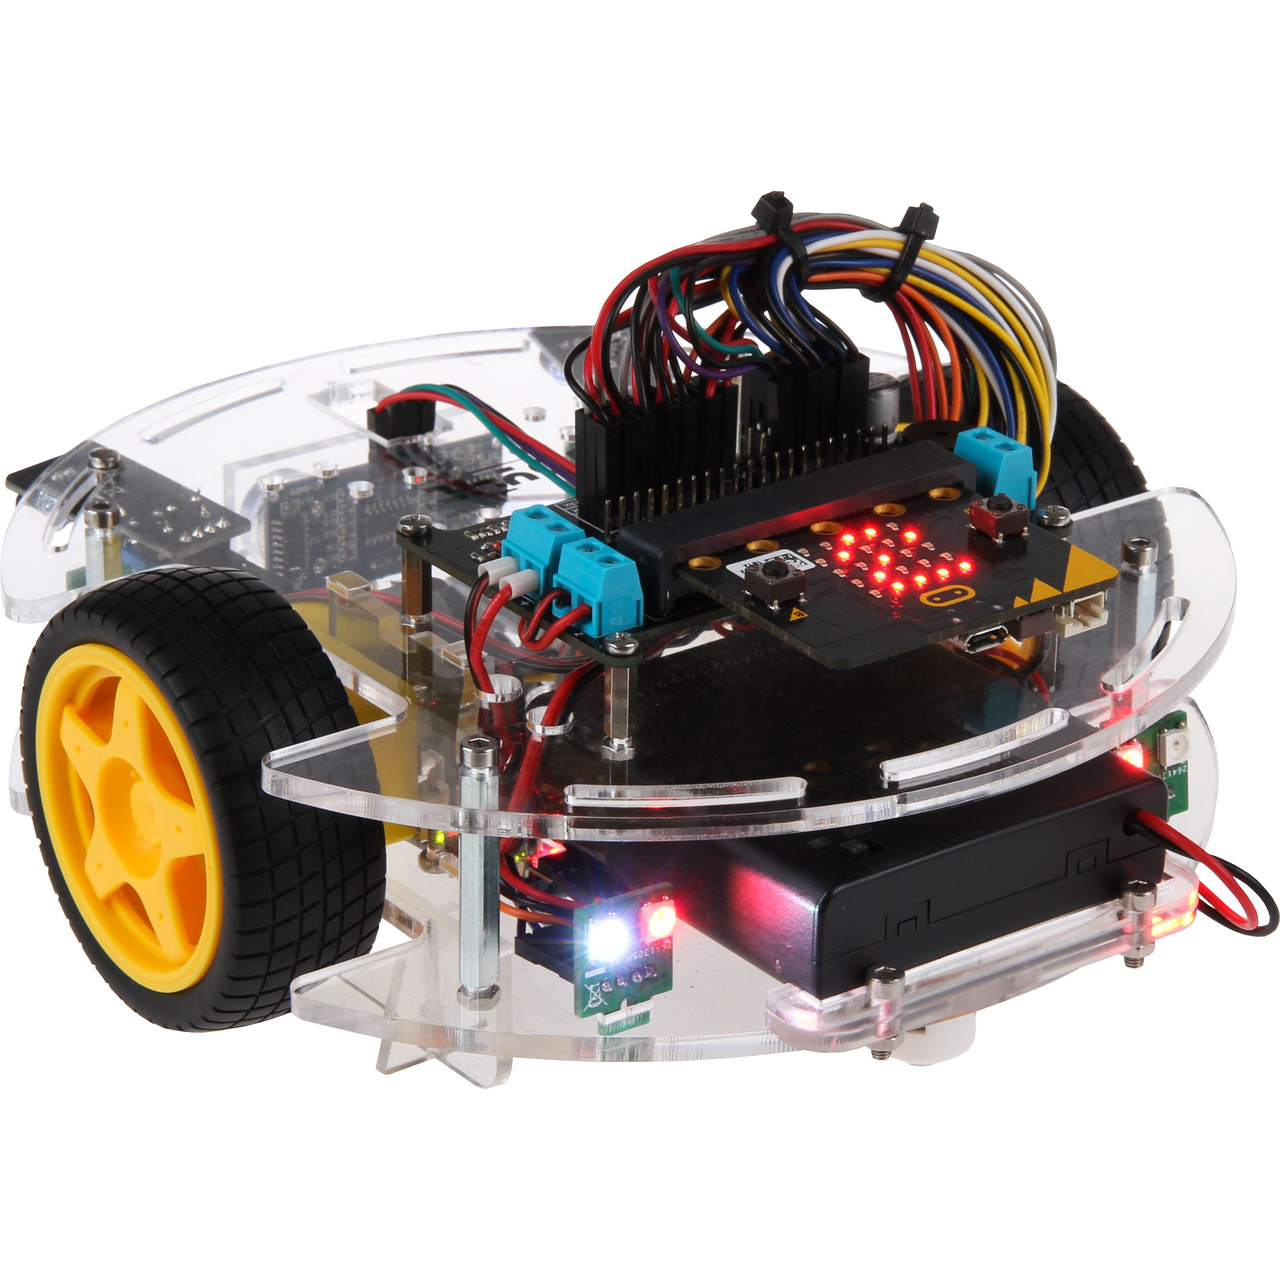 Joy-IT Bausatz programmierbares Roboterauto Joy-Car inkl- Einplatinencomputer micro:bit v2 unter Bausätze